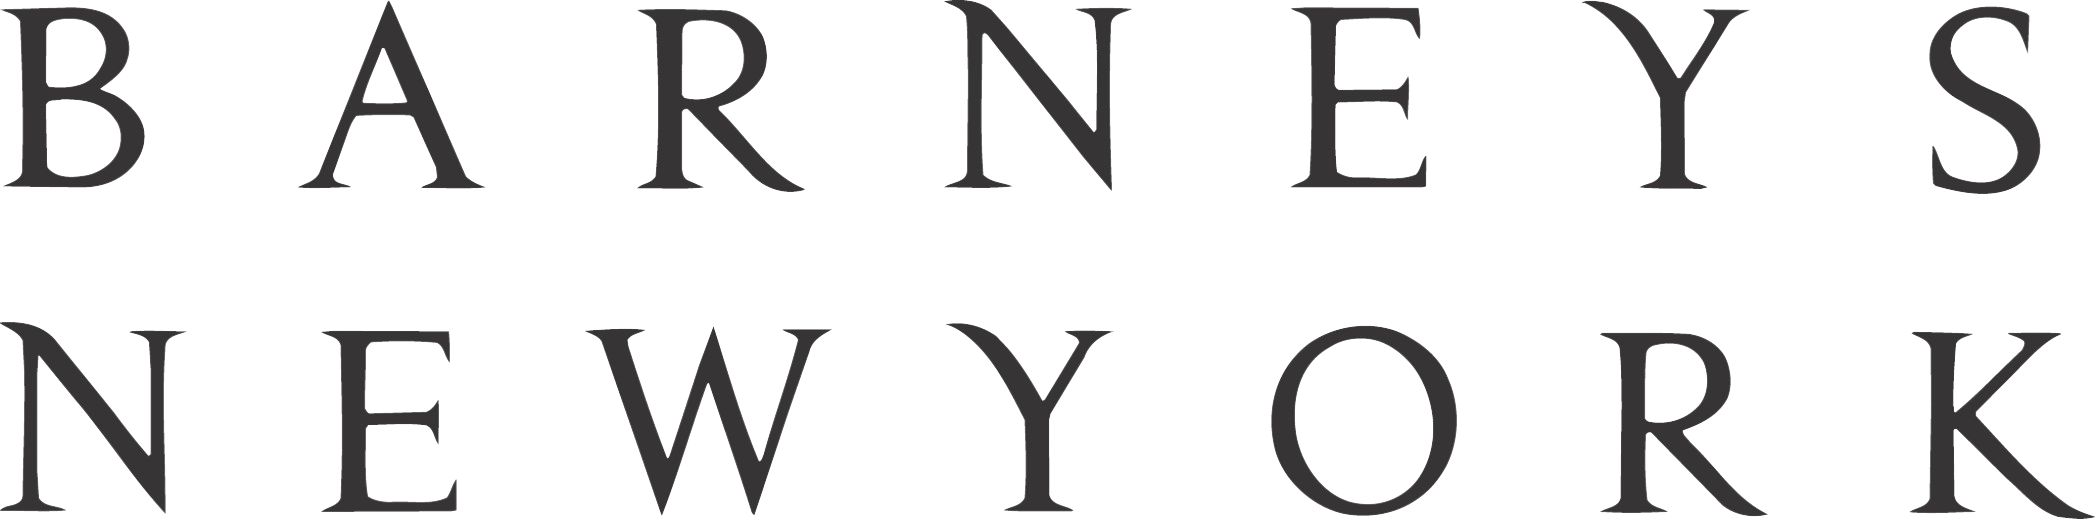 barneys-logo.png